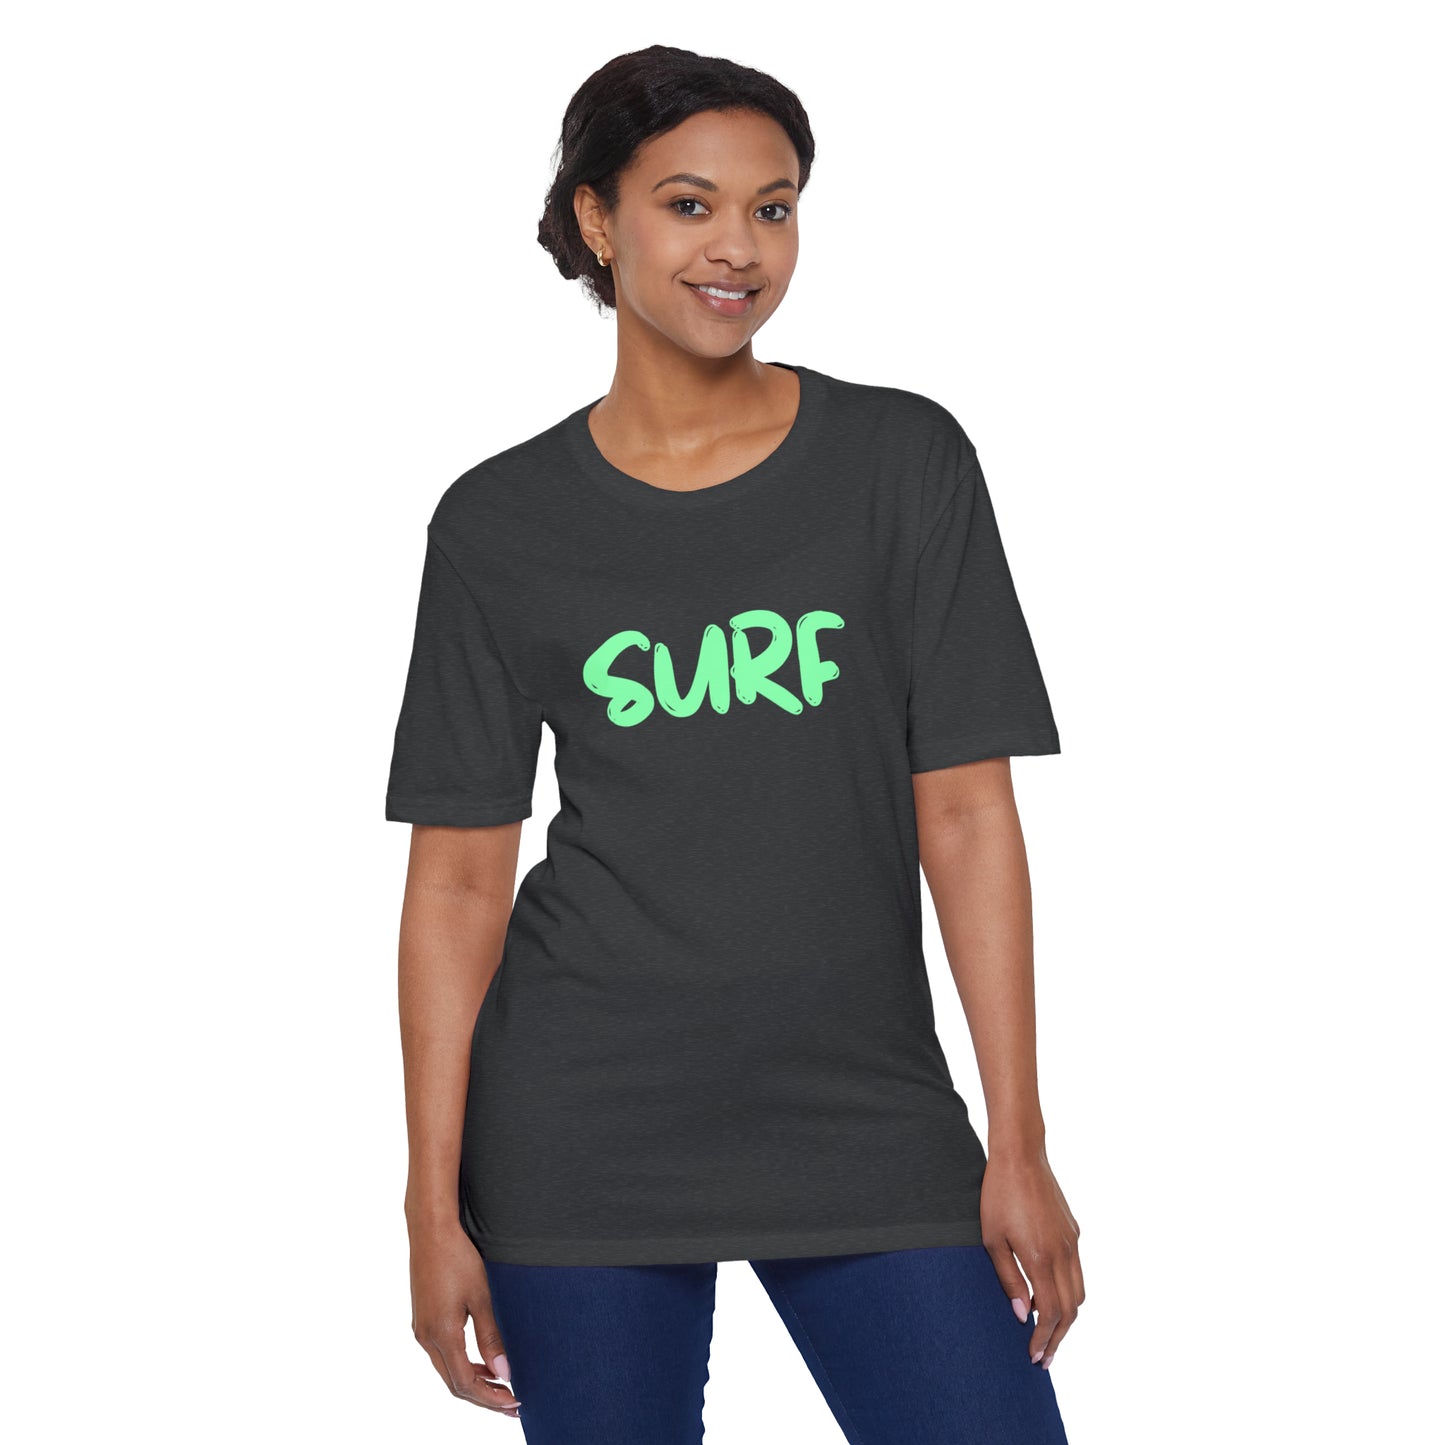 SURF Unisex District® Re-Tee®, Turquoise Script